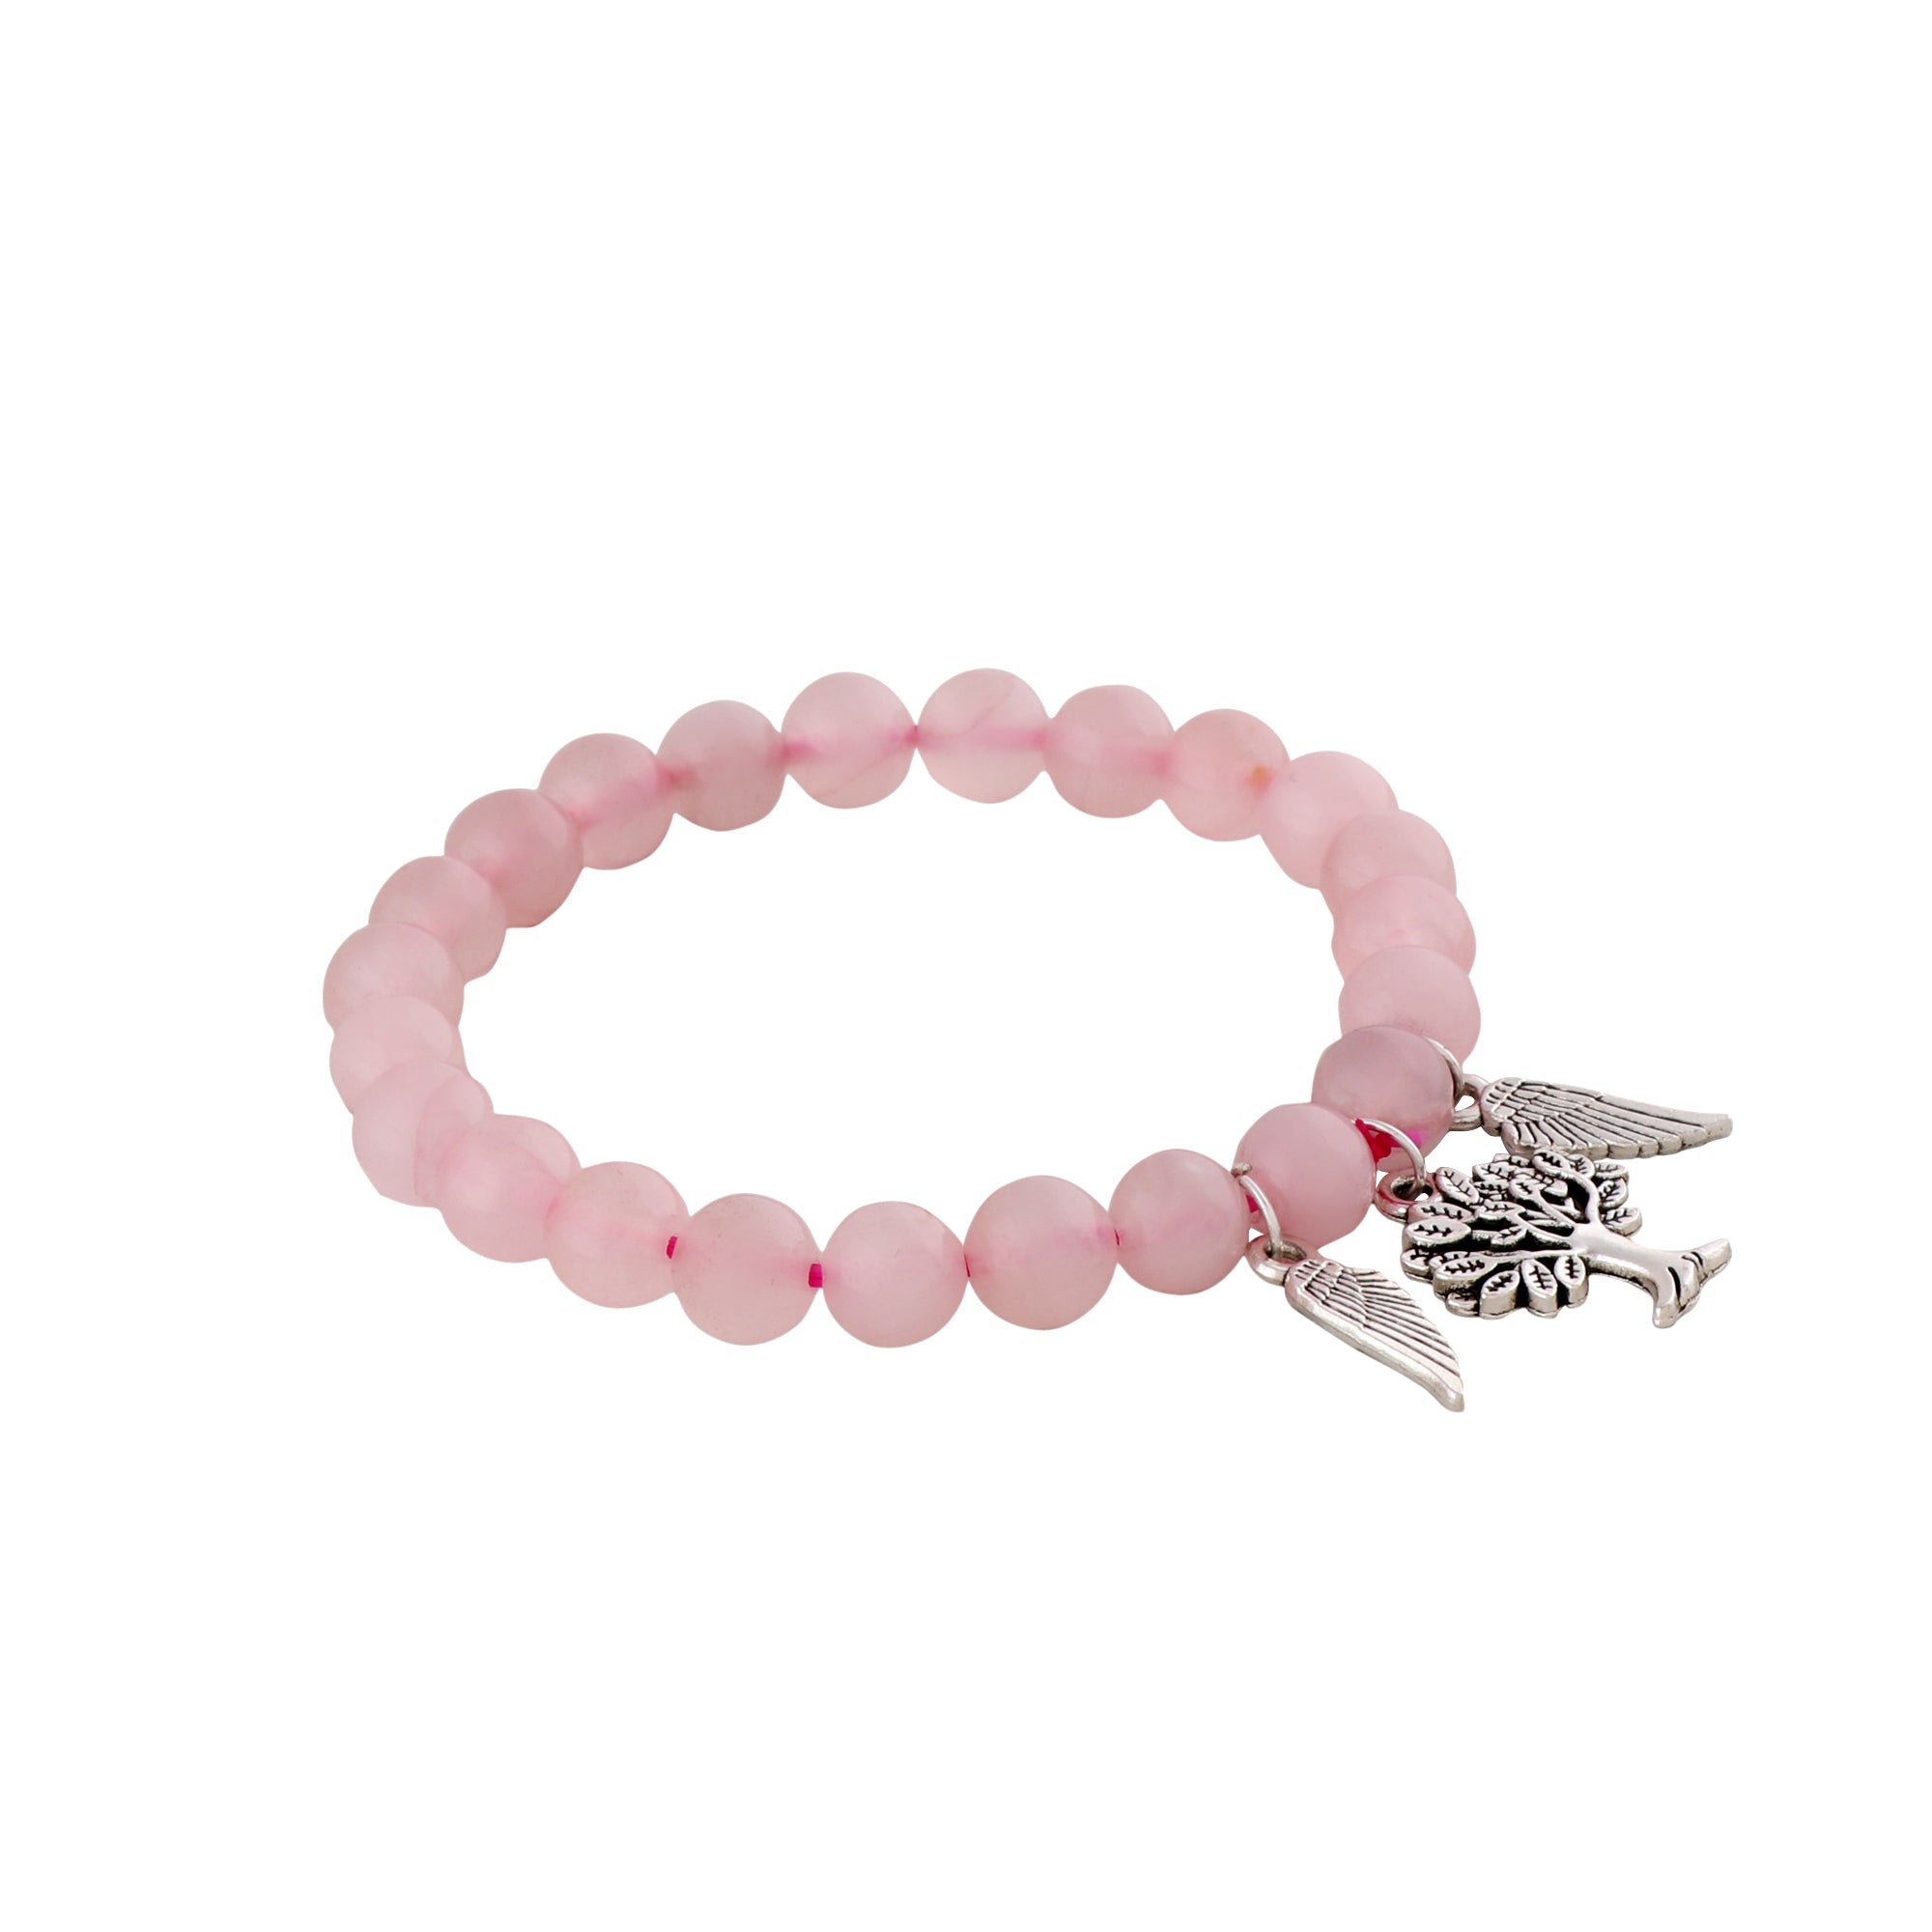 Rose Quartz With Pendant Stretchable Bracelet Natural Gemstone